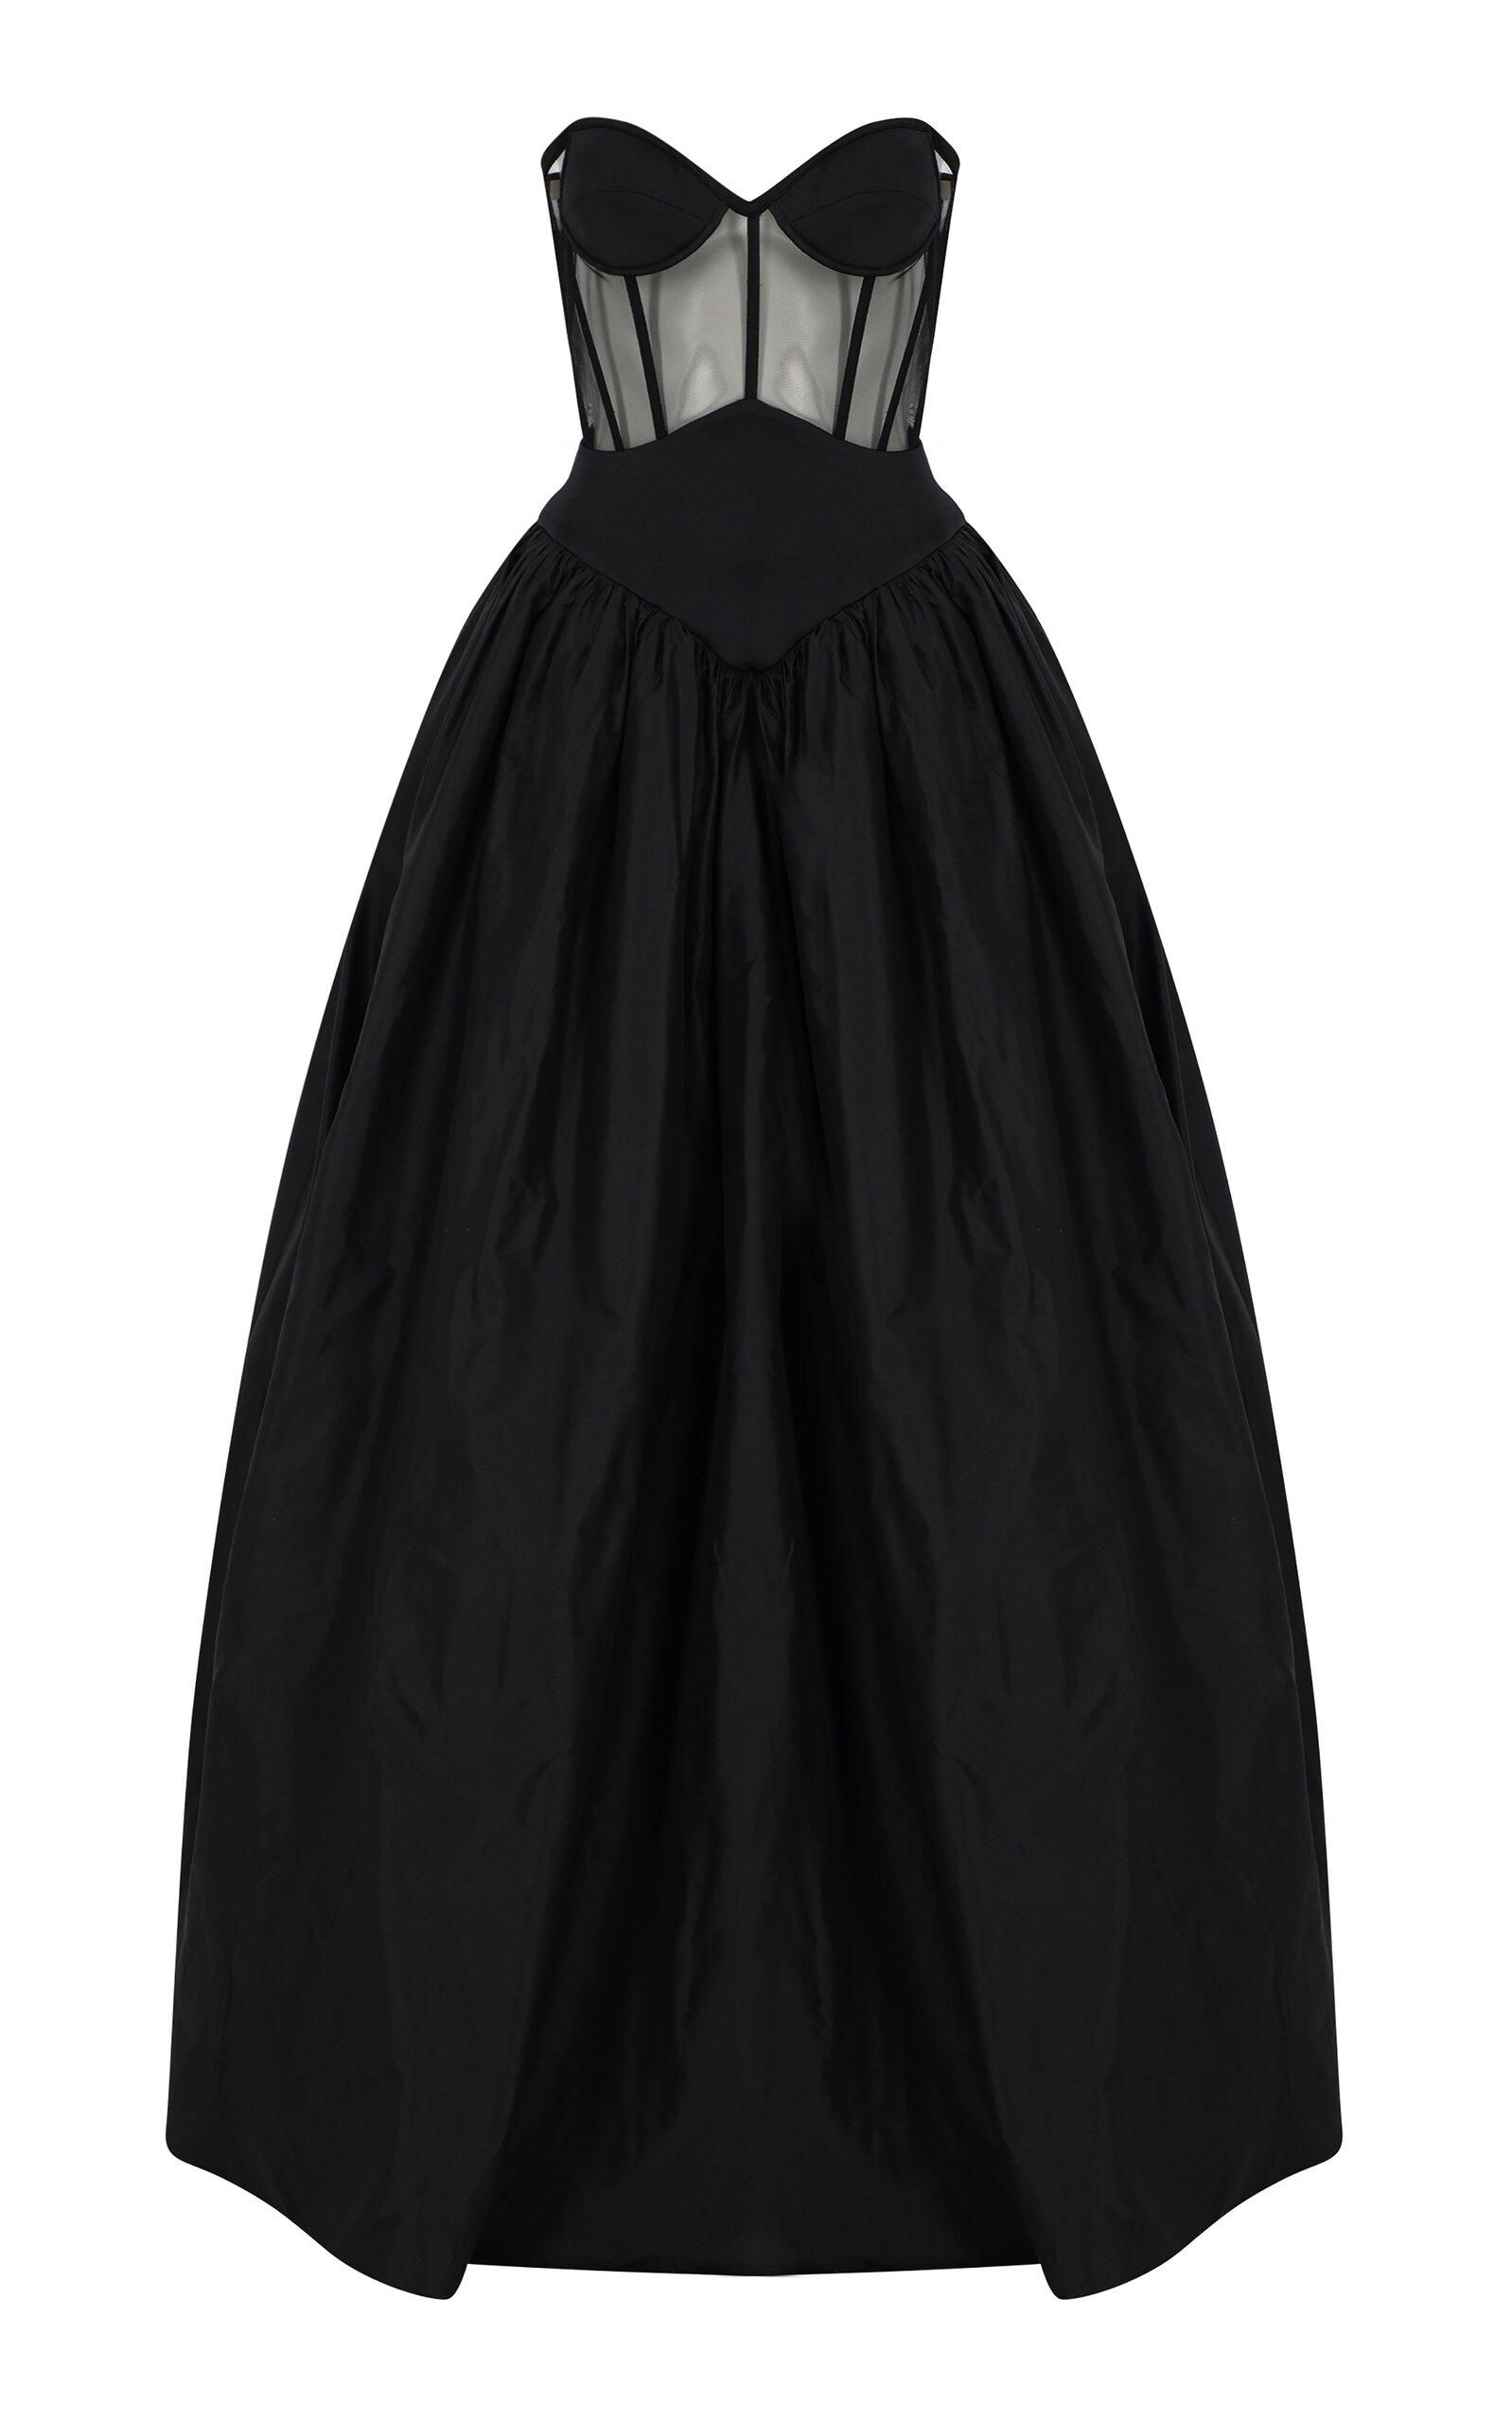 The New Arrivals Ilkyaz Ozel Astrea Sheer-paneled Silk Ball Gown In Black